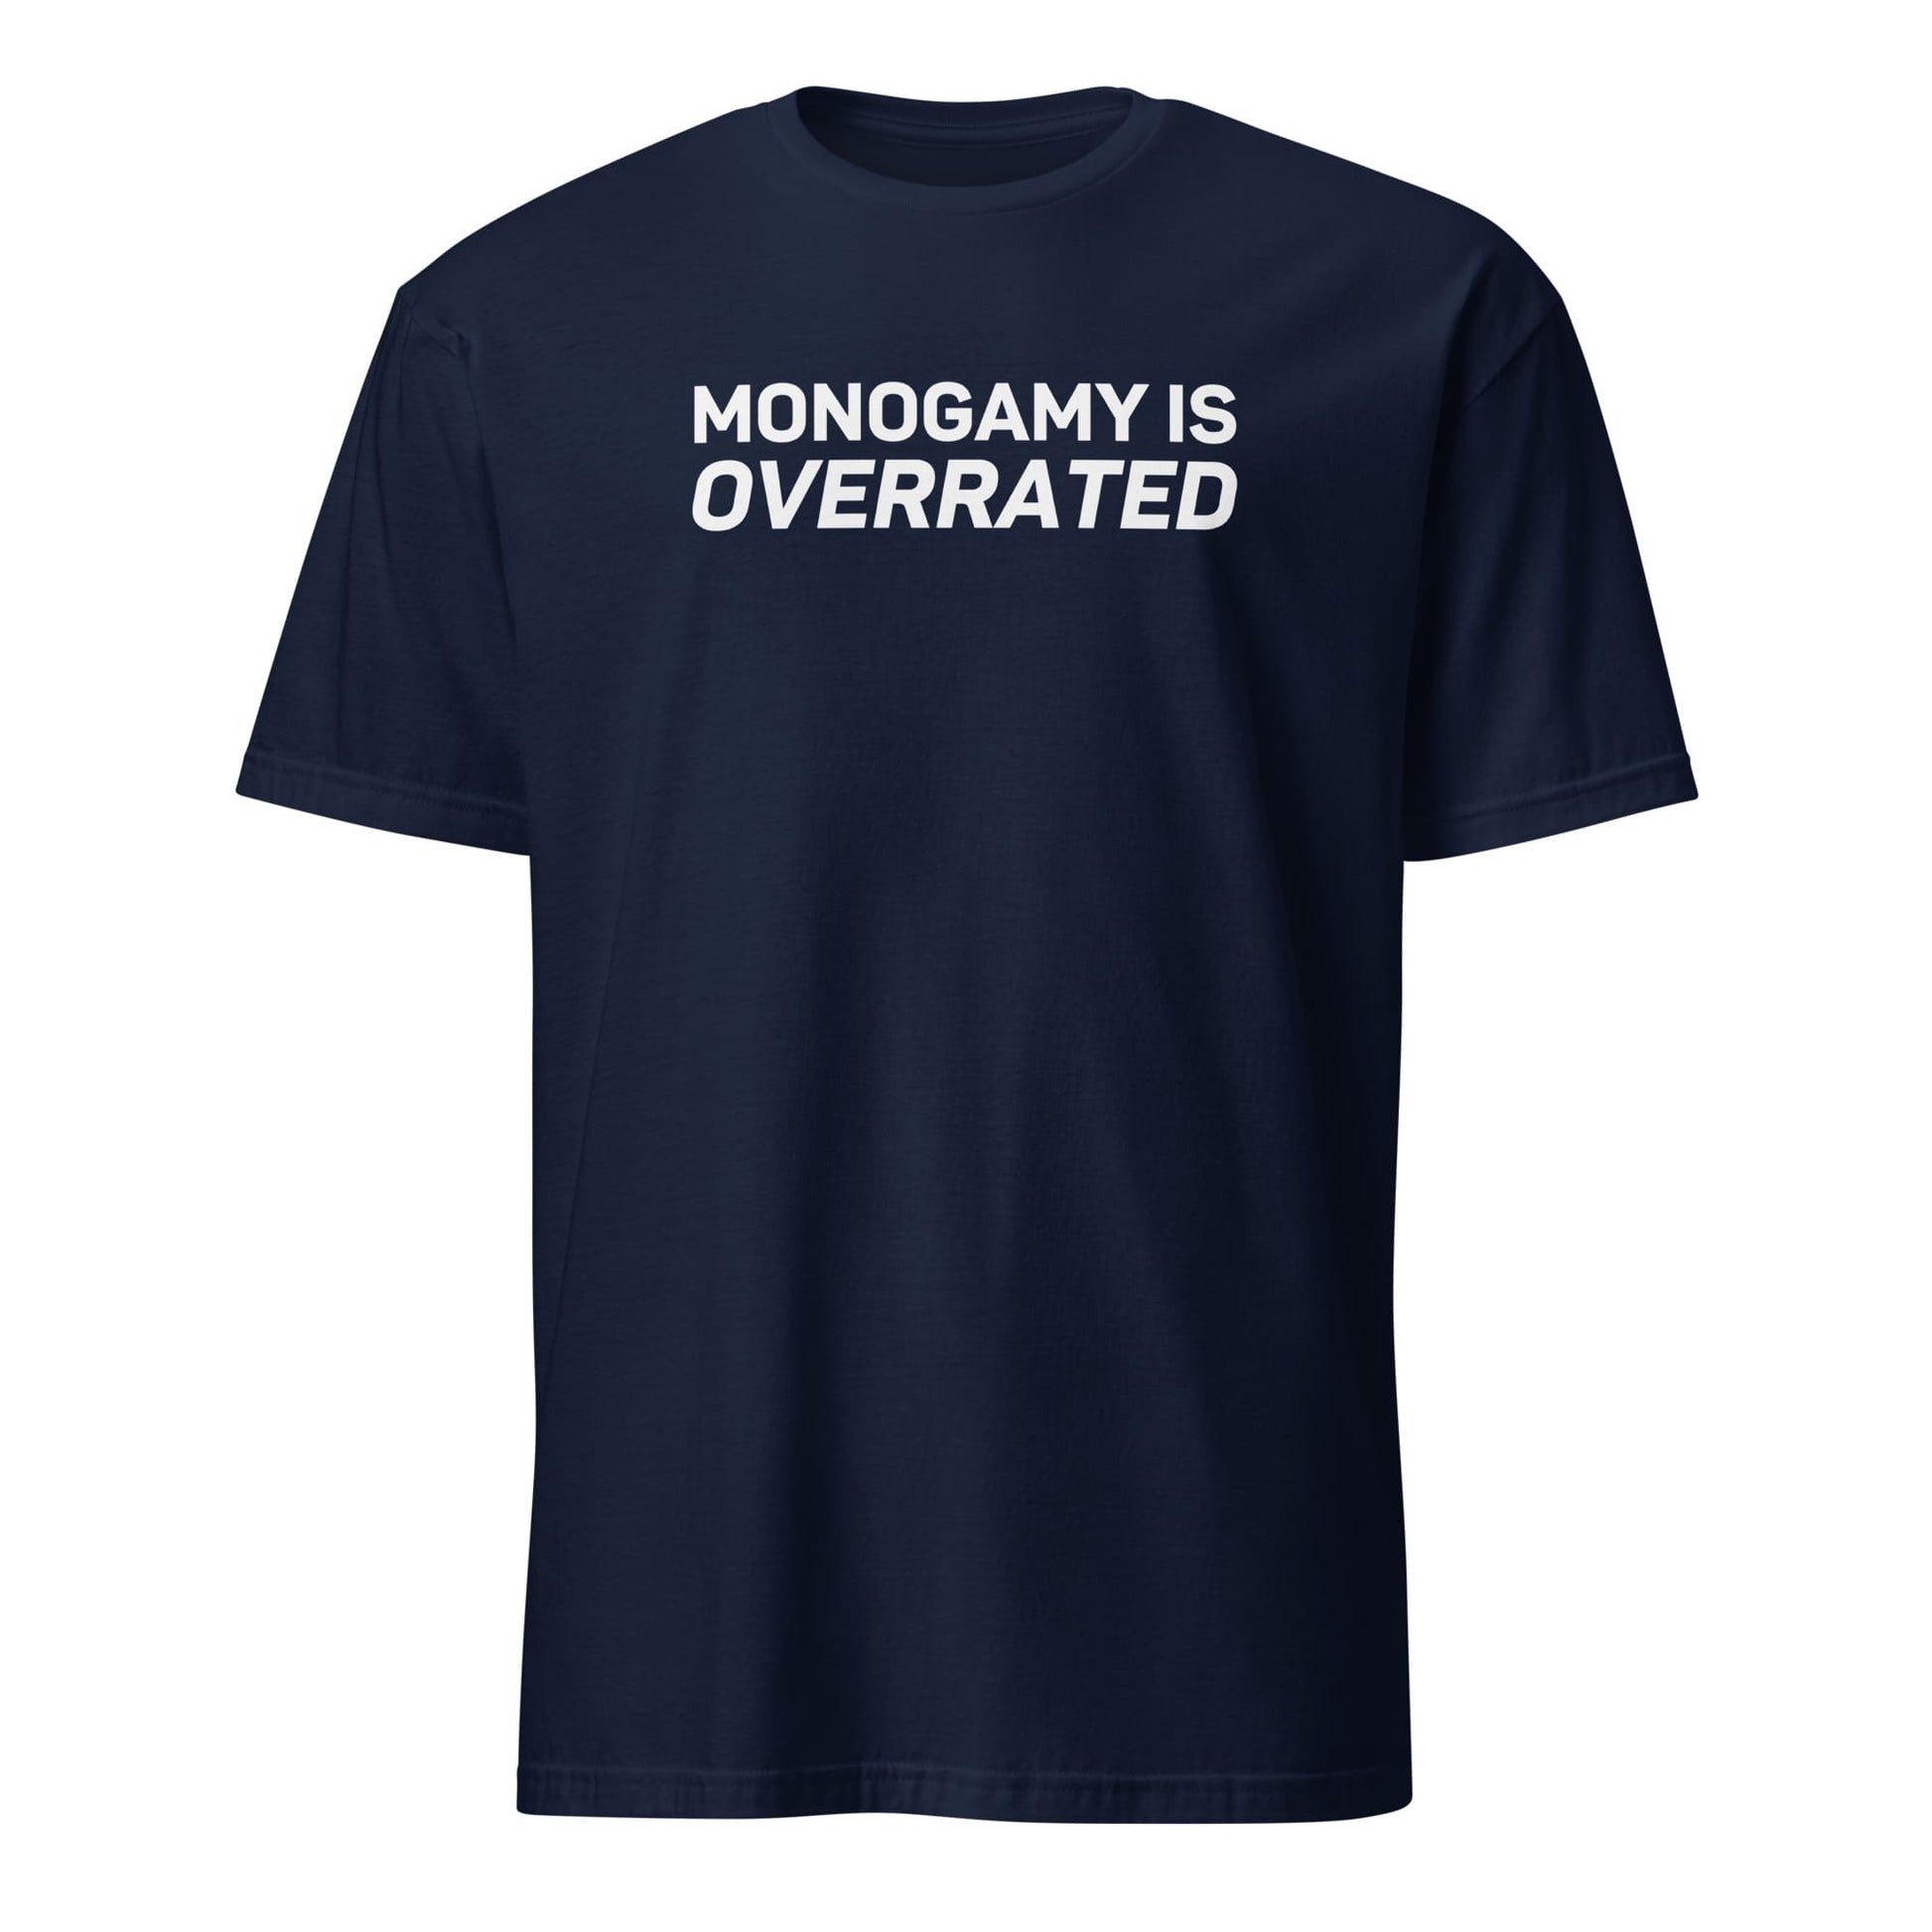 polyamory shirt, statement polyamorous pride quote, navy